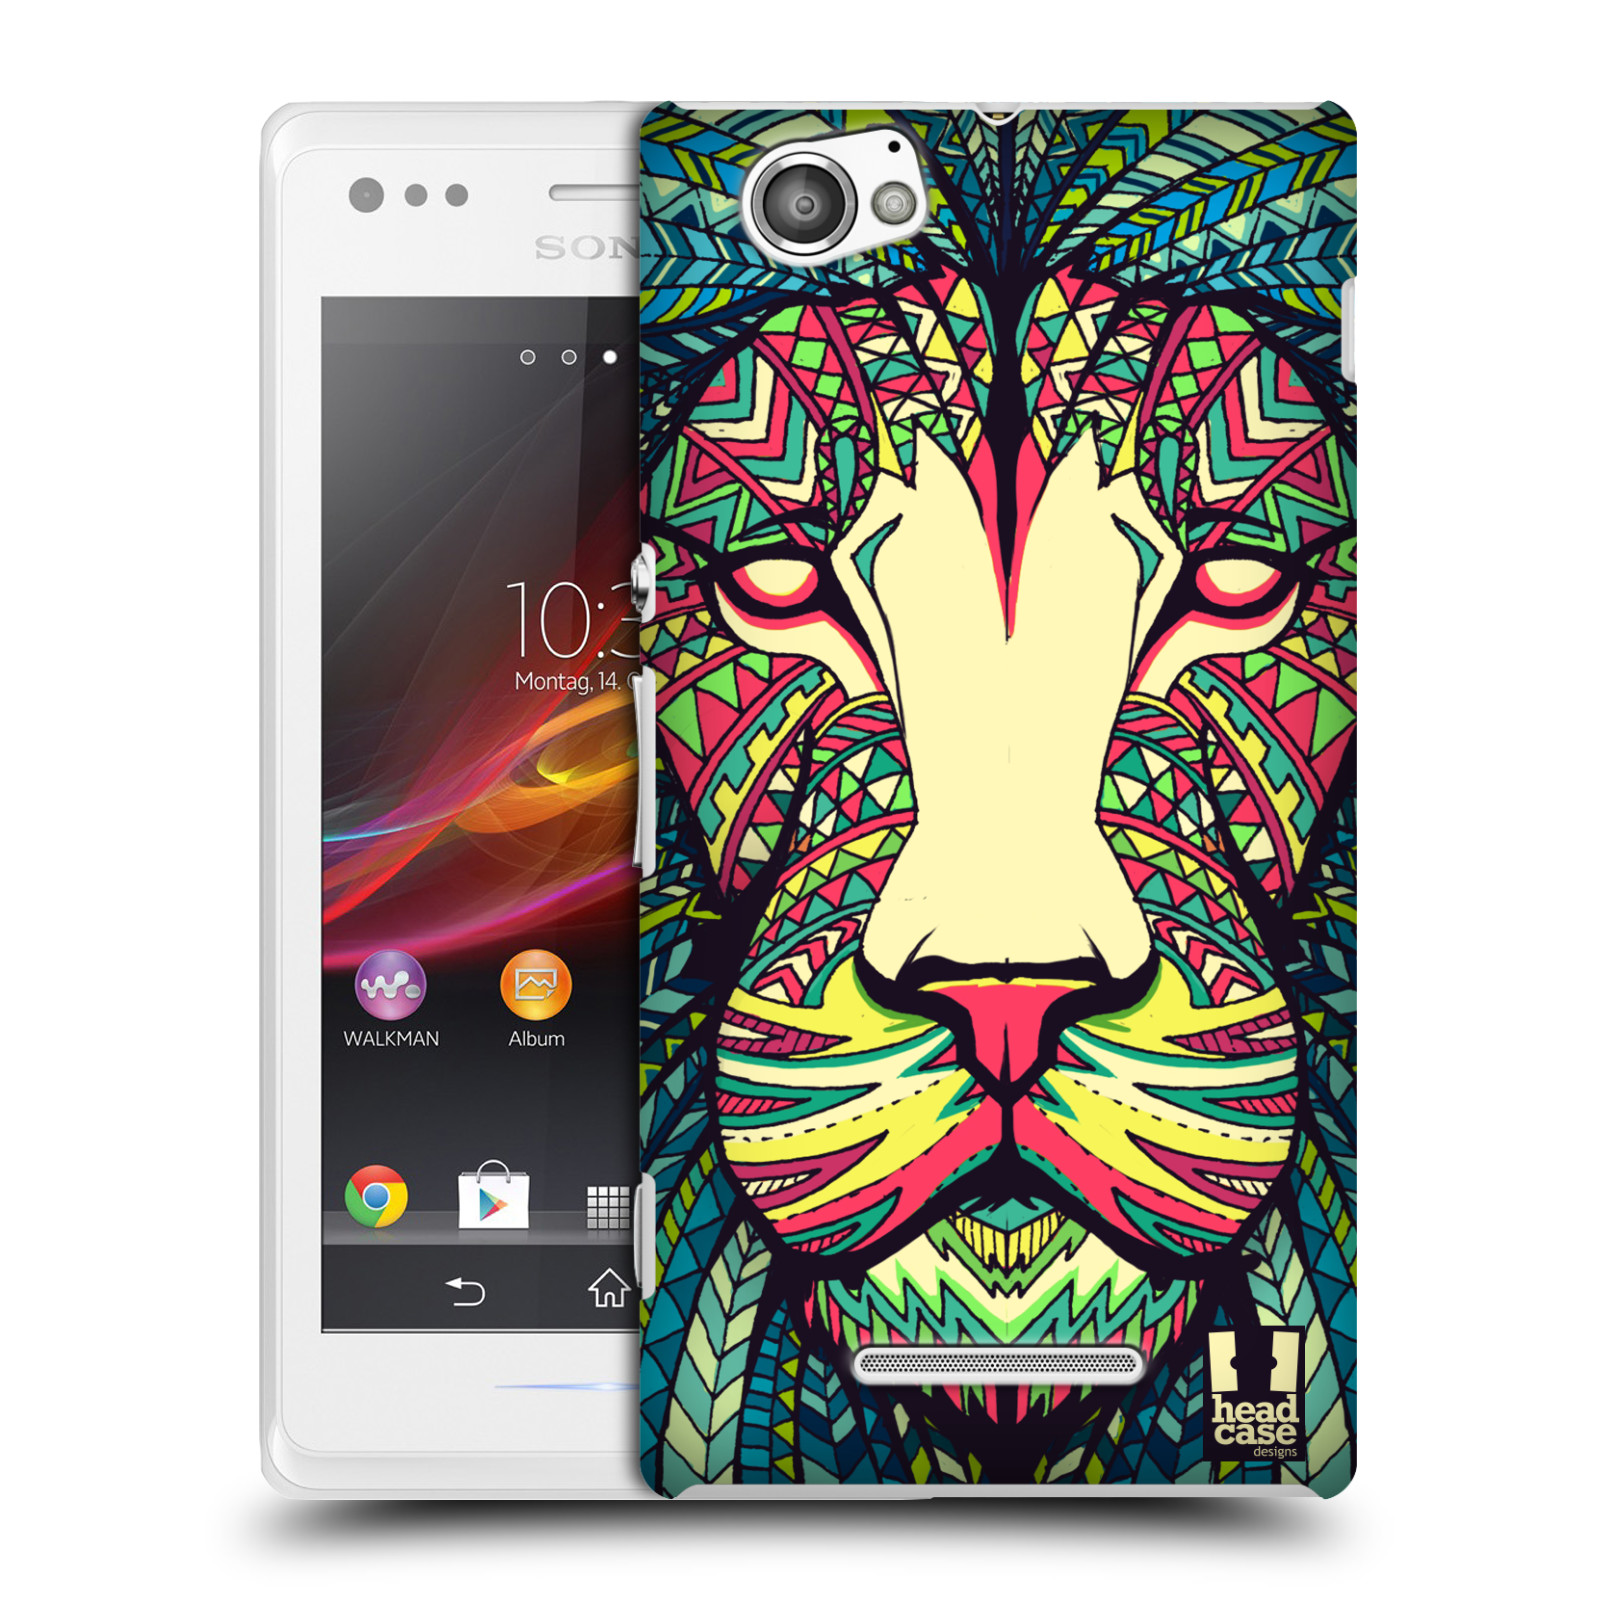 HEAD CASE plastový obal na mobil Sony Xperia M vzor Aztécký motiv zvíře lev